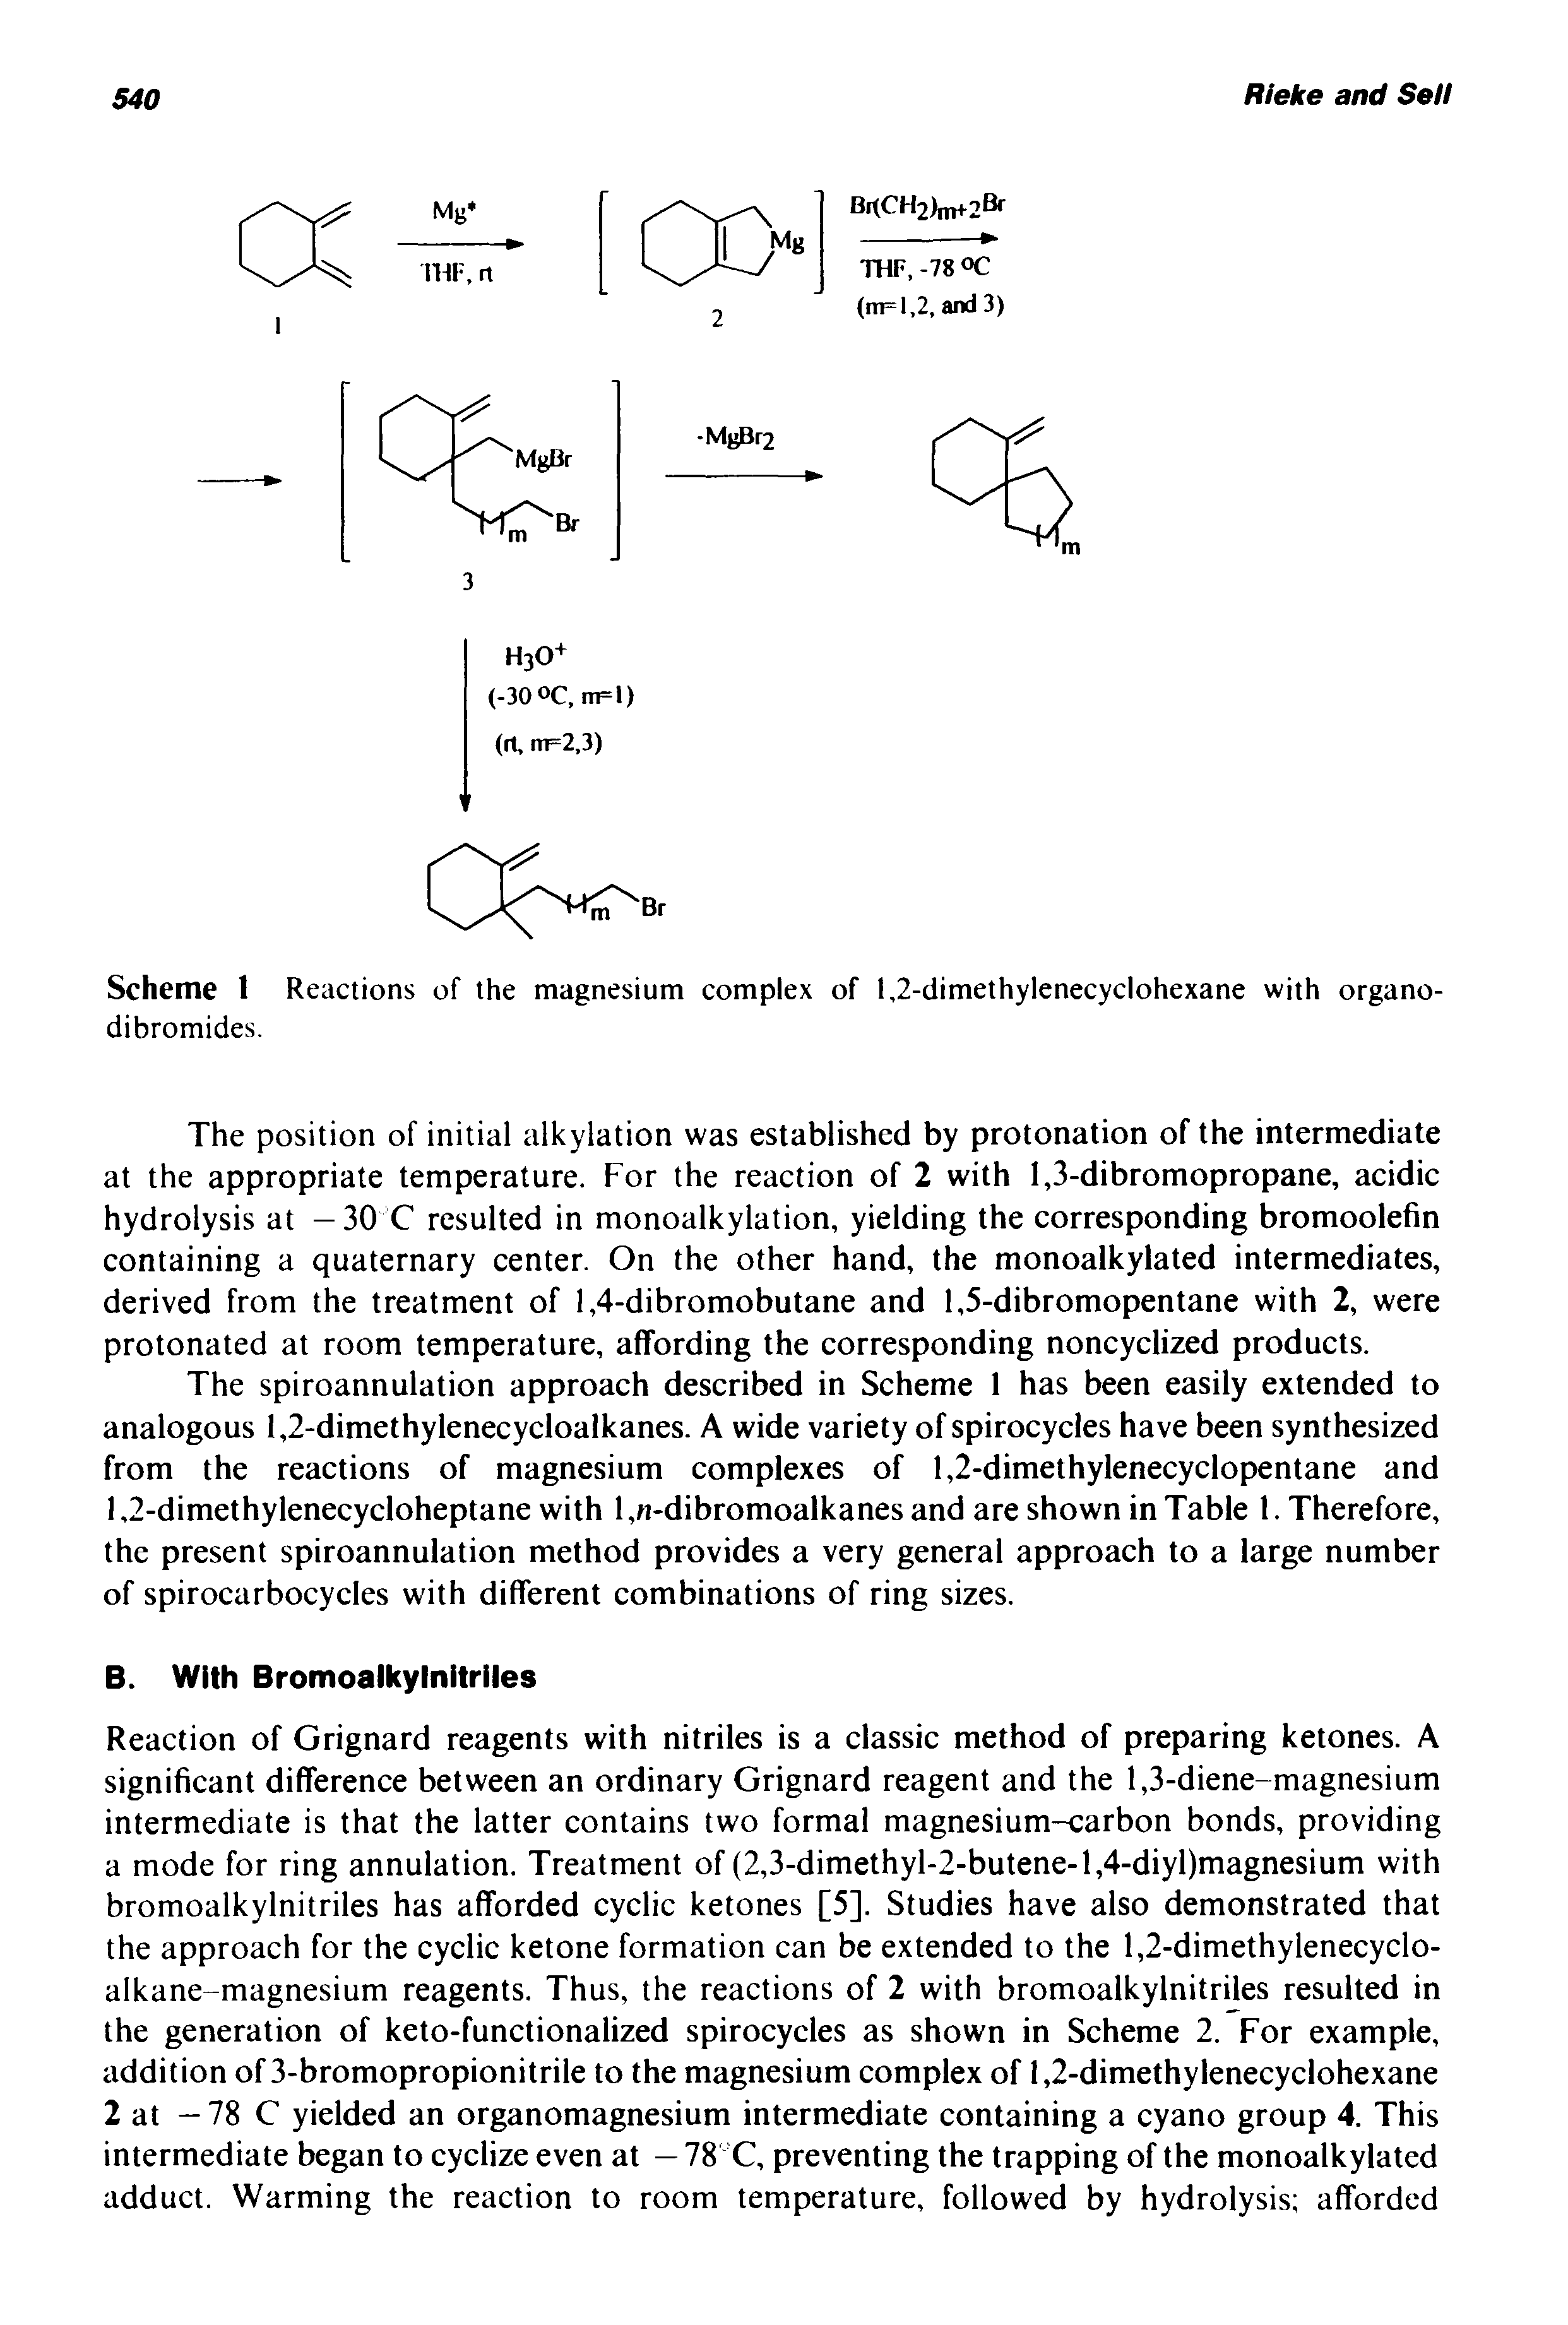 Scheme 1 Reactions of the magnesium complex of 1,2-dimethylenecyclohexane with organo-dibromides.